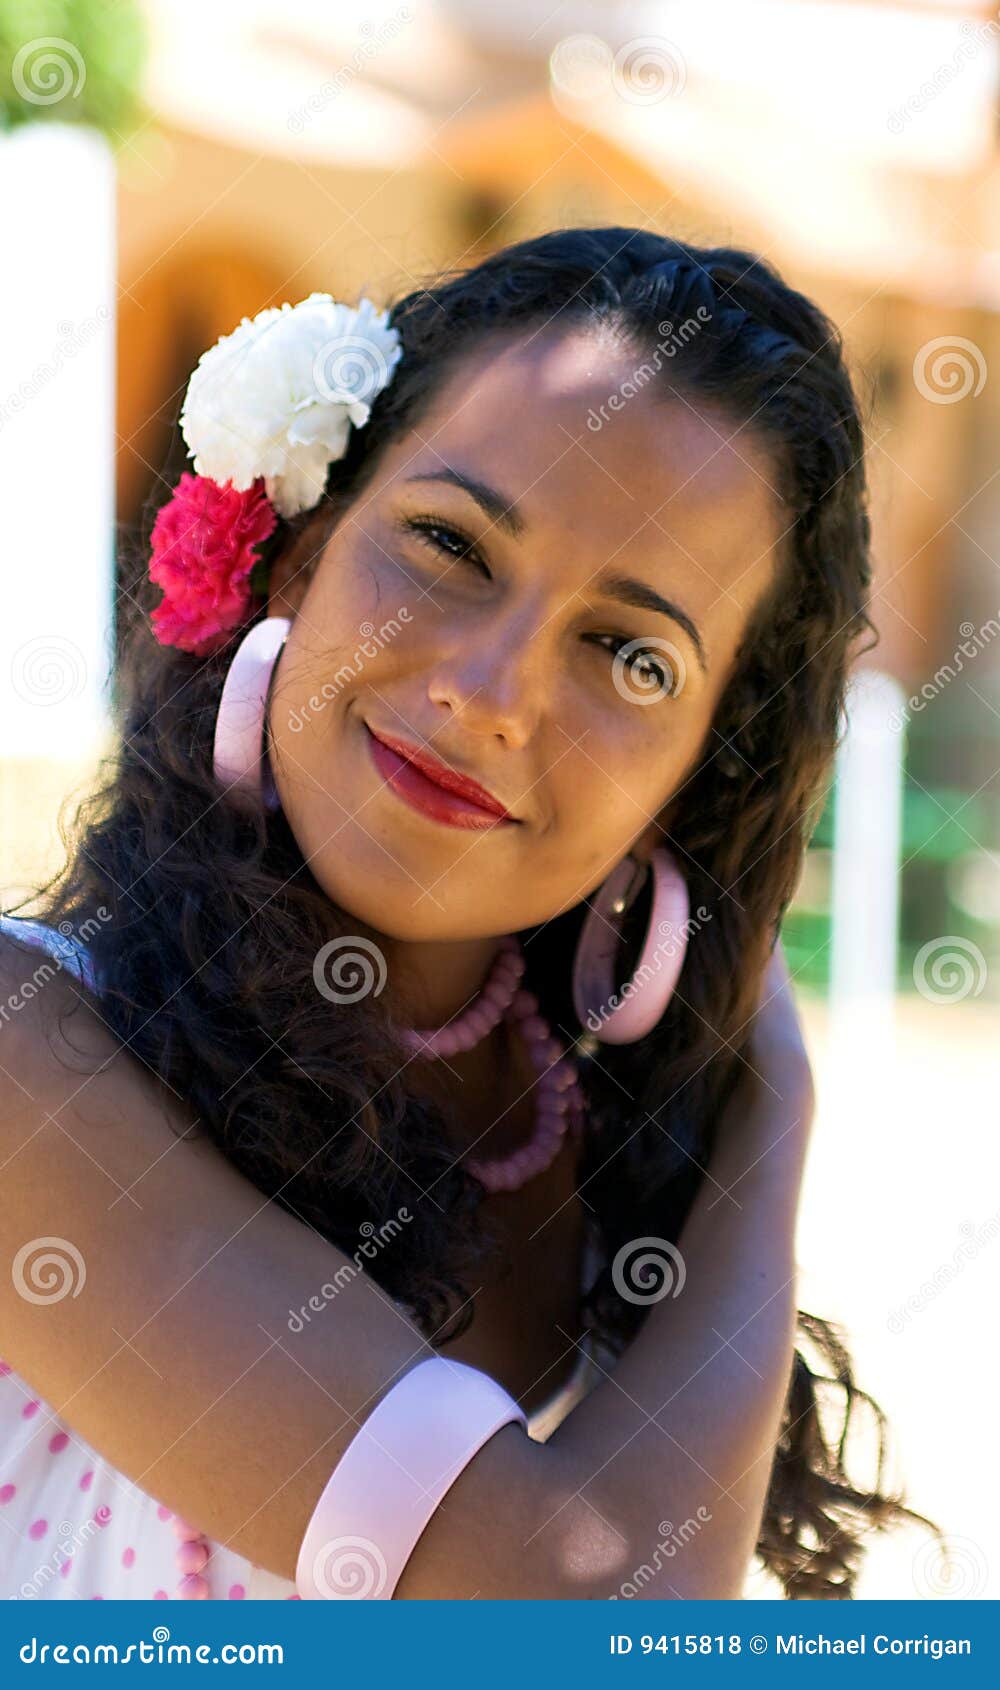 spanish woman in feria dress adjusts hair